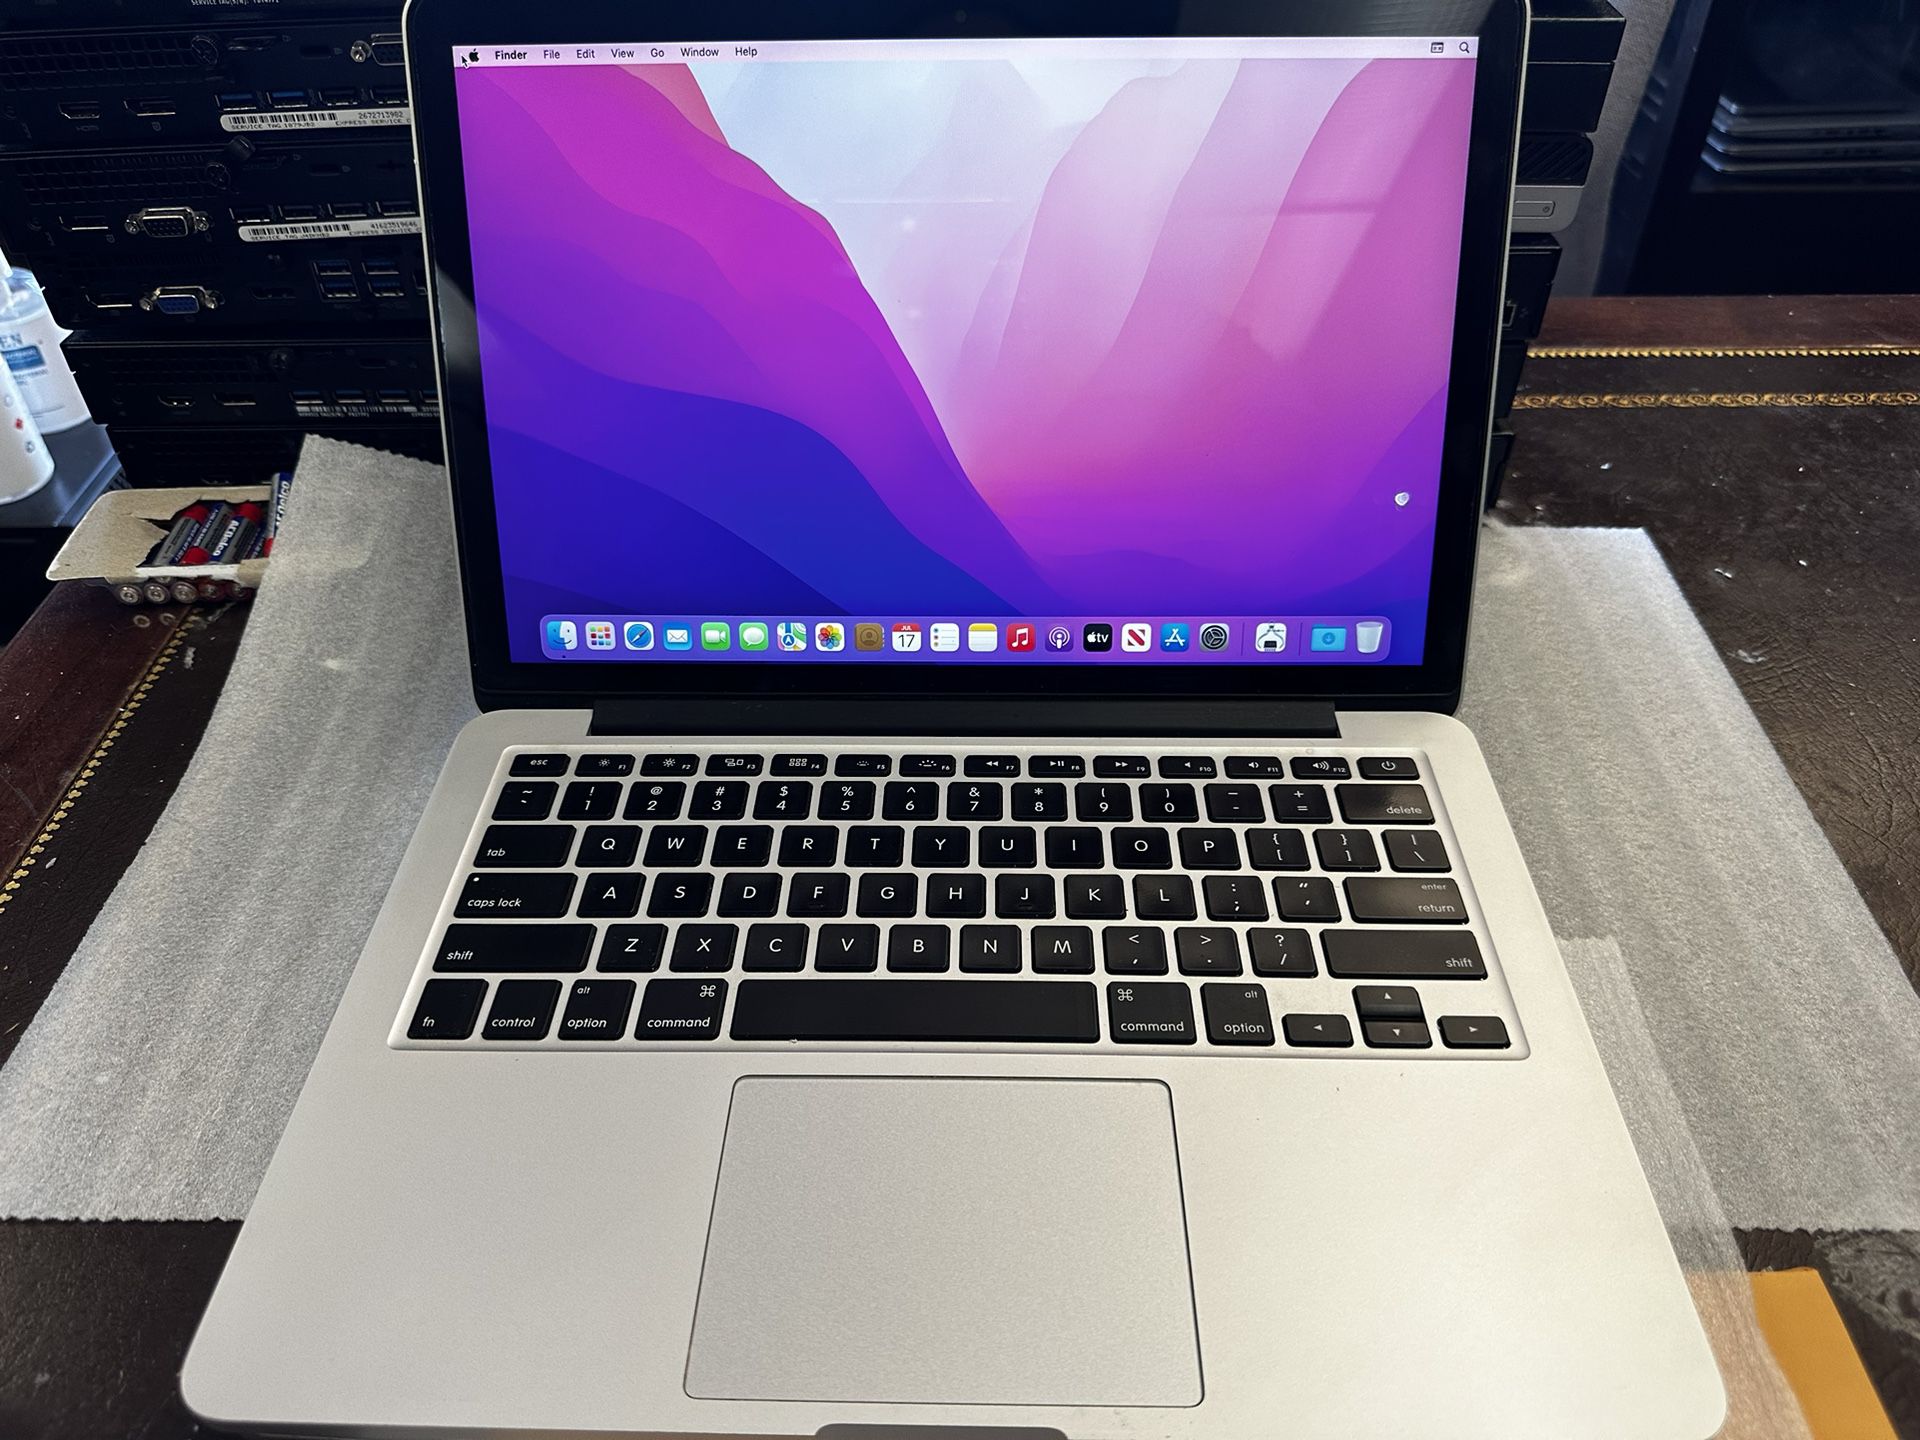 MacBook Pro 13 inches- MacOS Monterey 